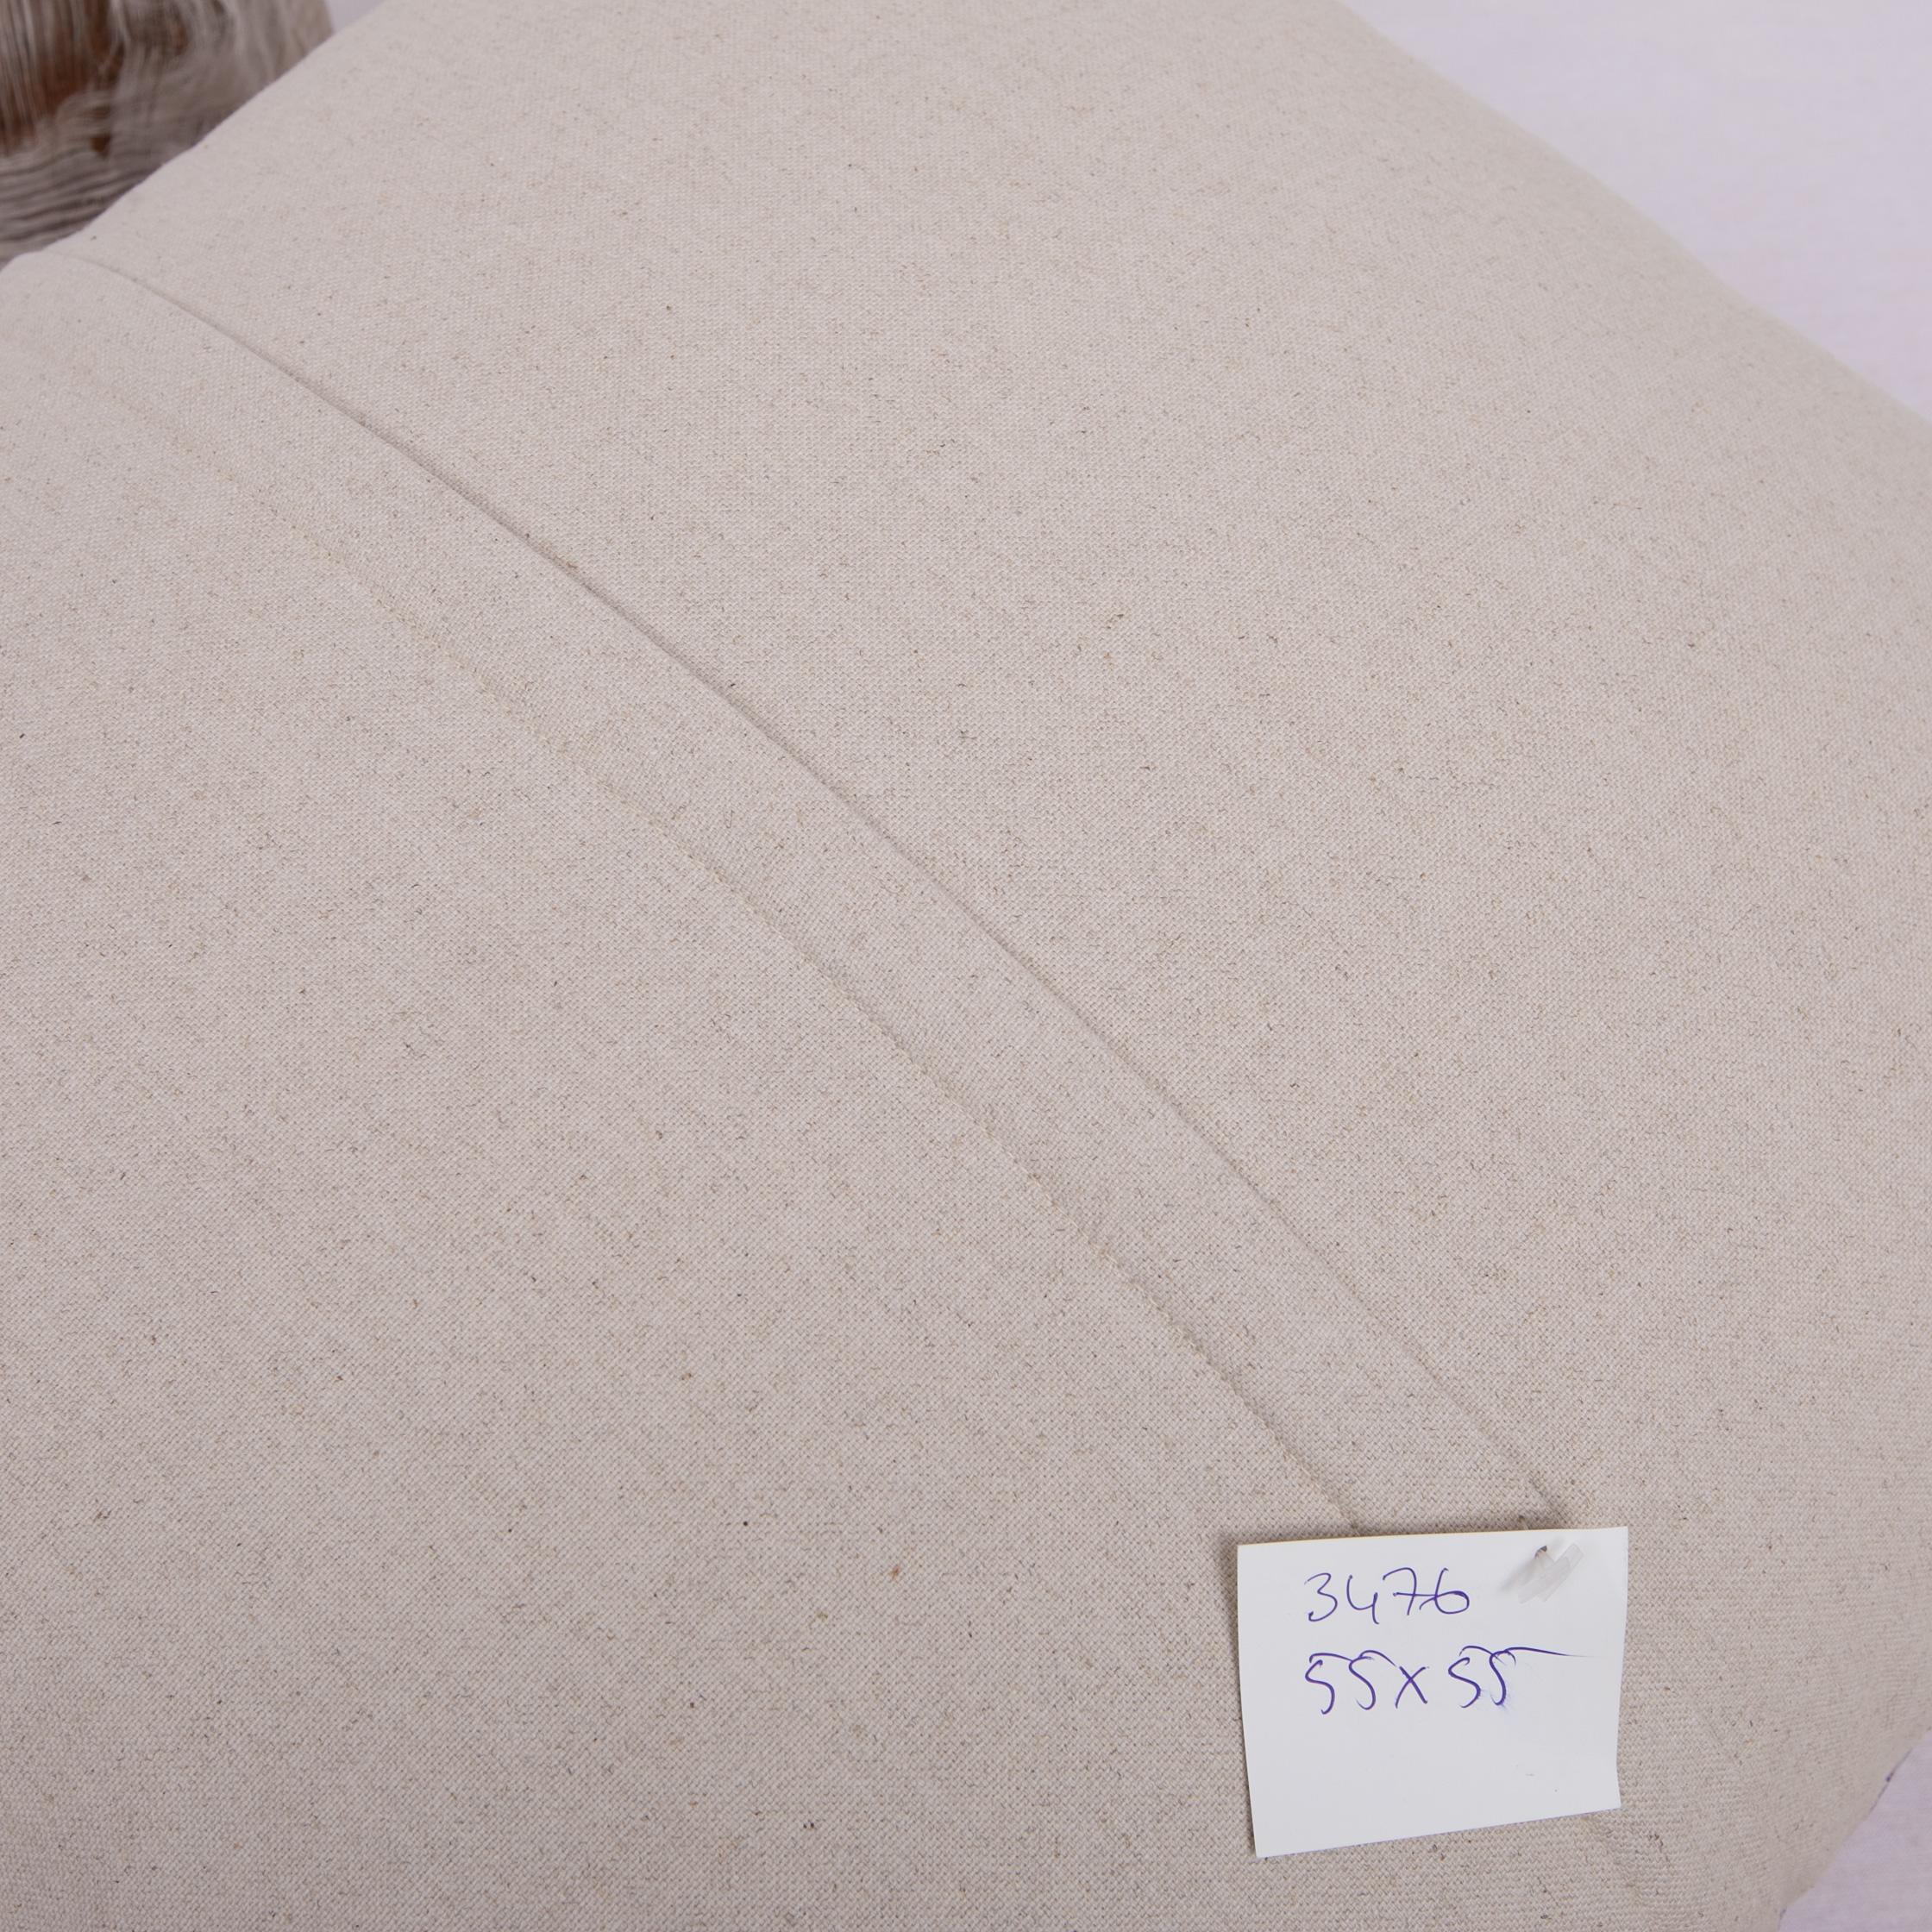 Cotton Antique Silk Pillowcase/Cushion Cover Made from an Early 20th C. Uzbek Silk